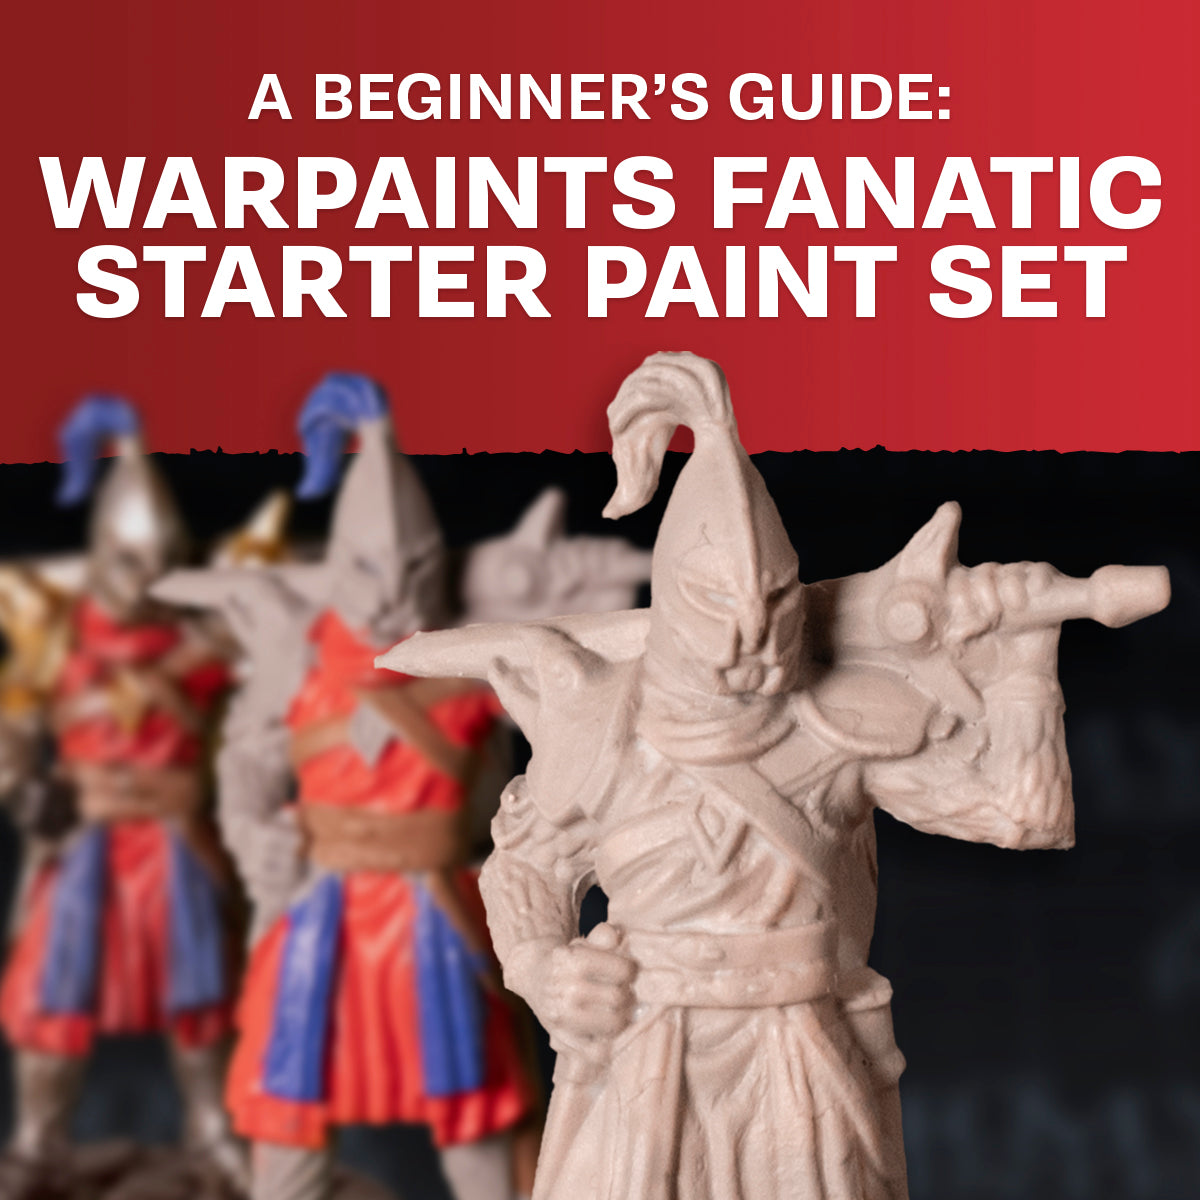 A Beginner’s Guide: Warpaints Fanatic Starter Paint Set